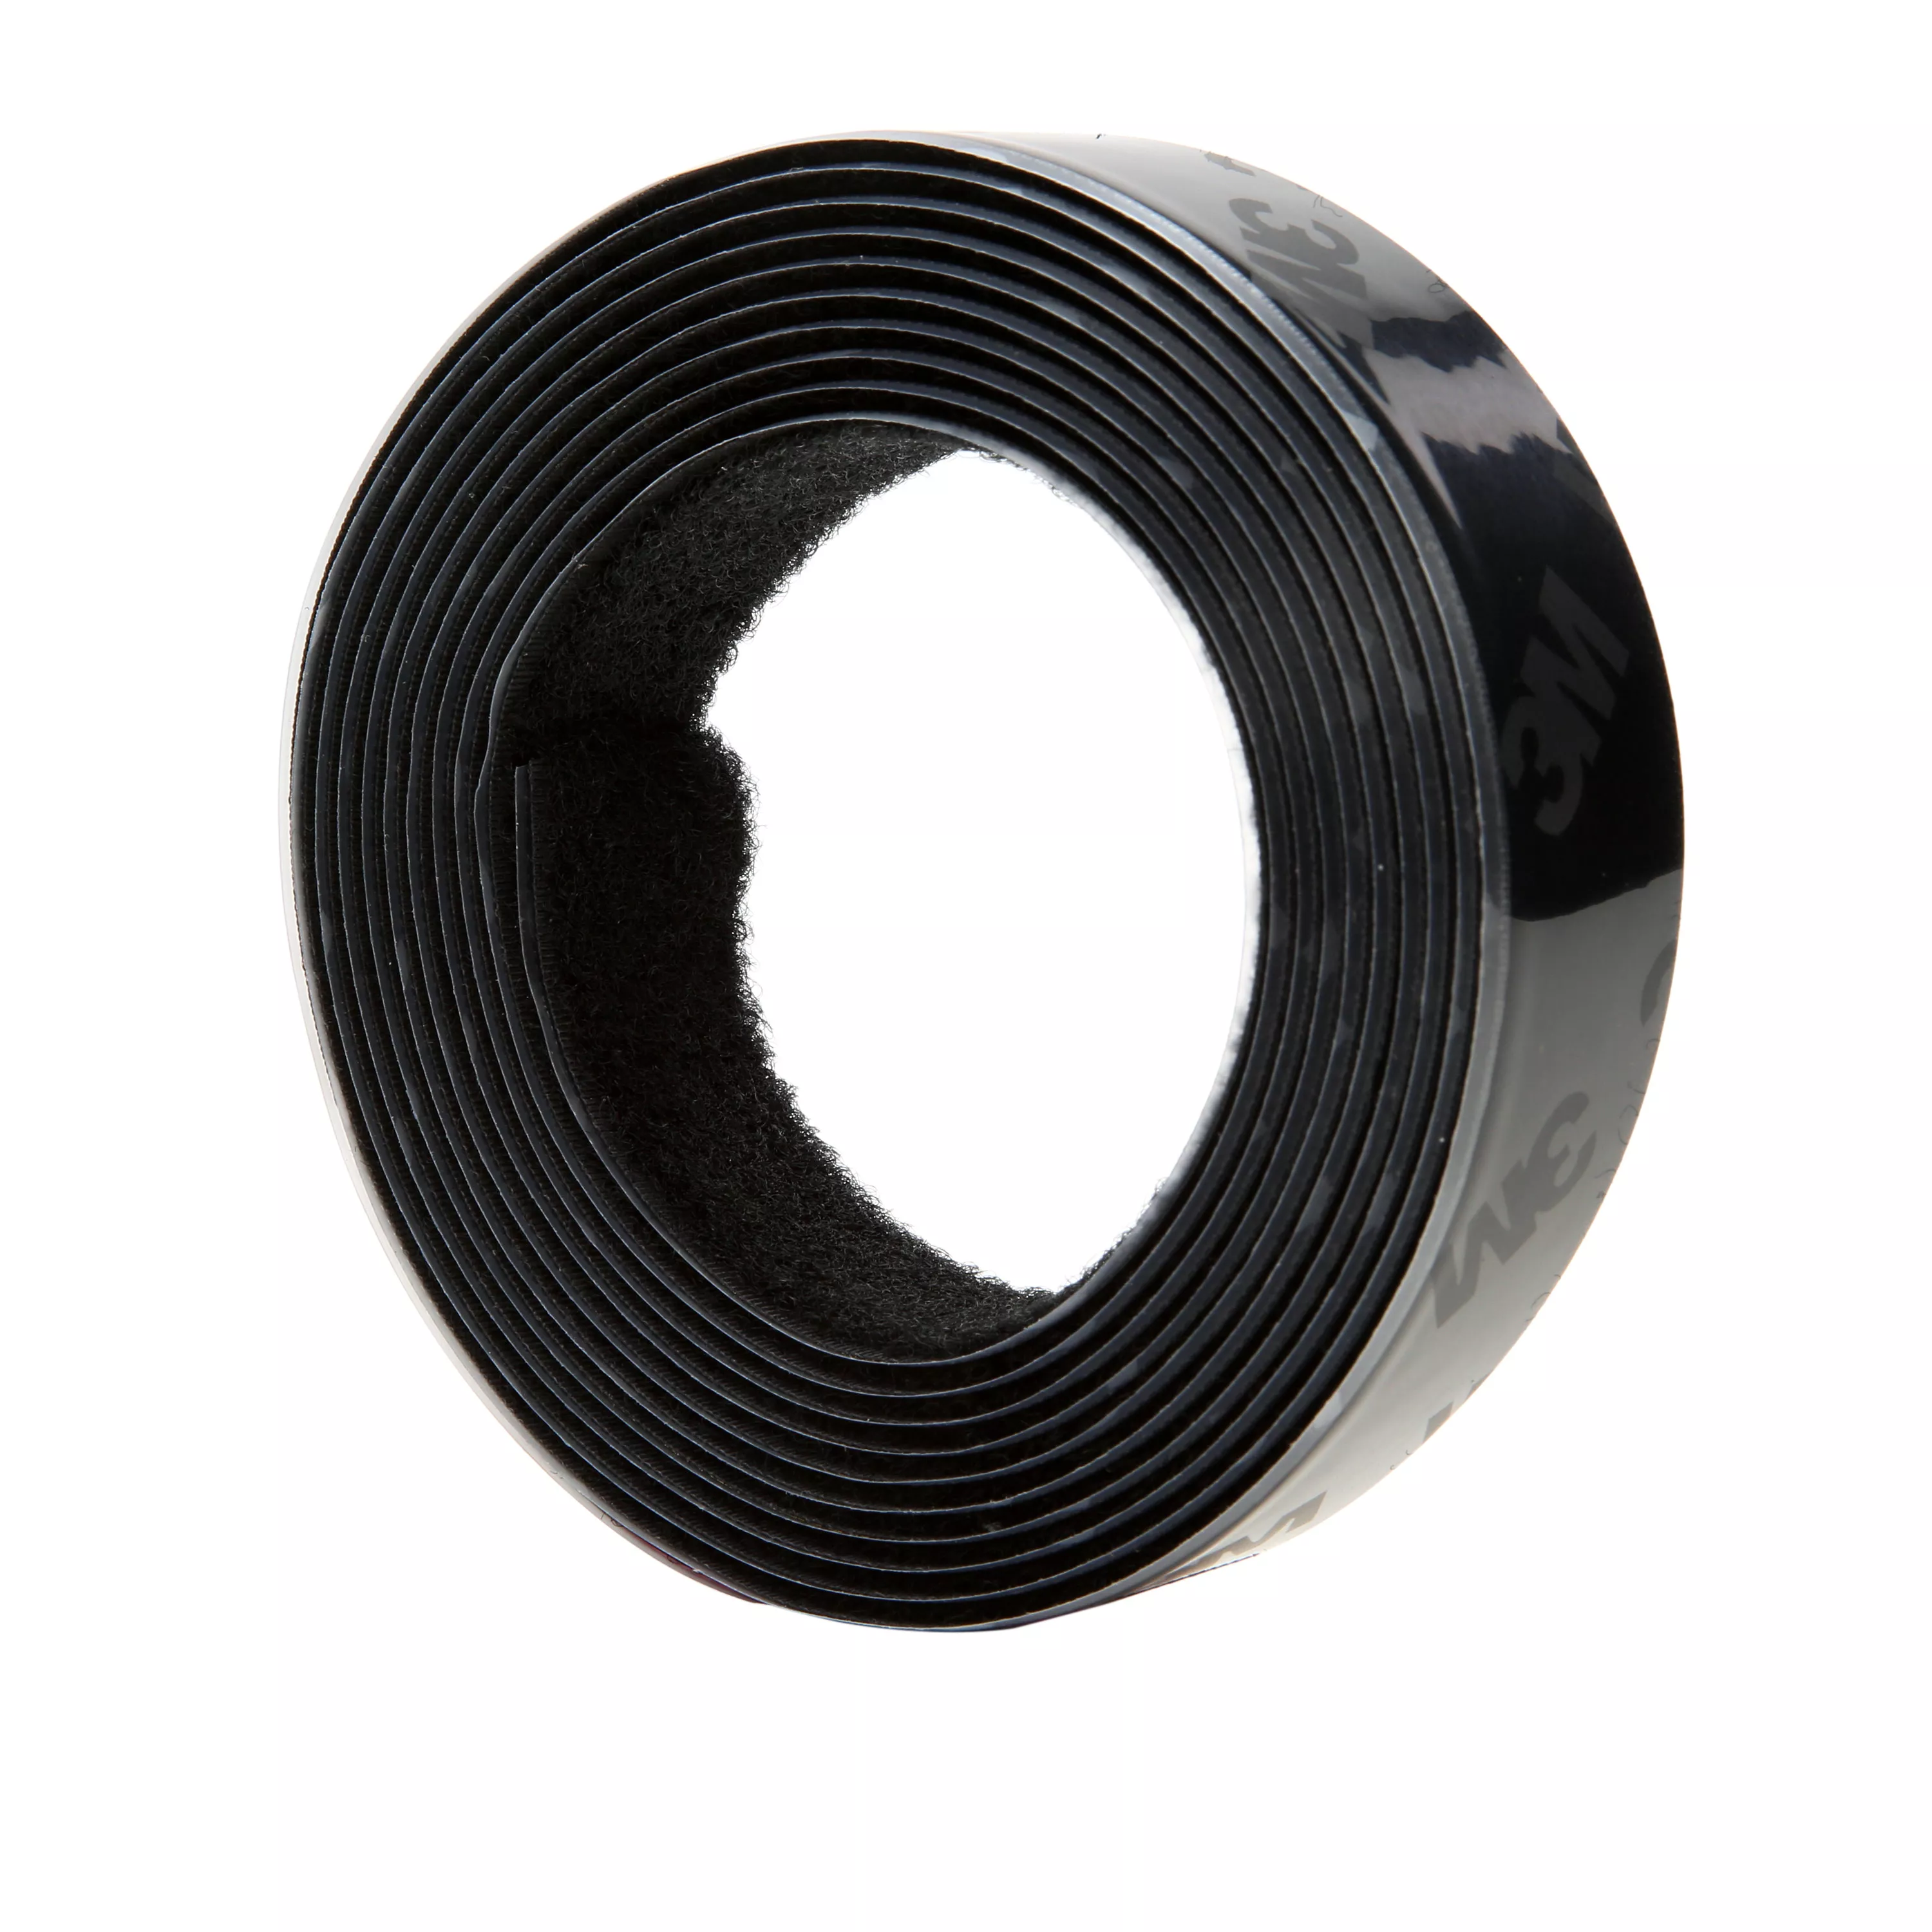 3M™ Hook/Loop Fastener TB3571/TB3572, Black, 1 in x 10 ft, (1 mated
Strip/Bag) 8 Bag/Case